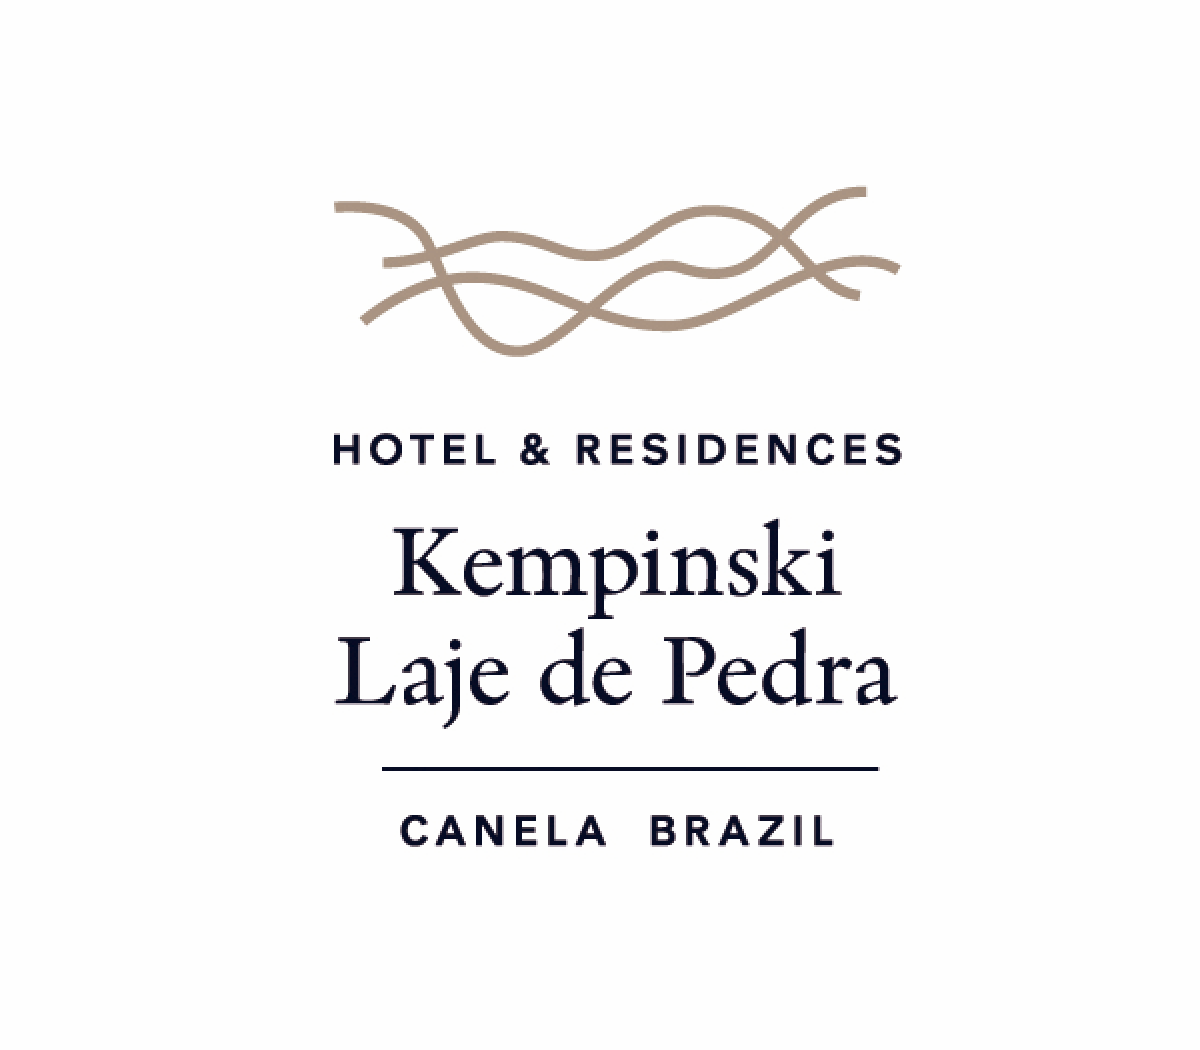 Kempinski Laje de Pedra partnering with THIRDHOME